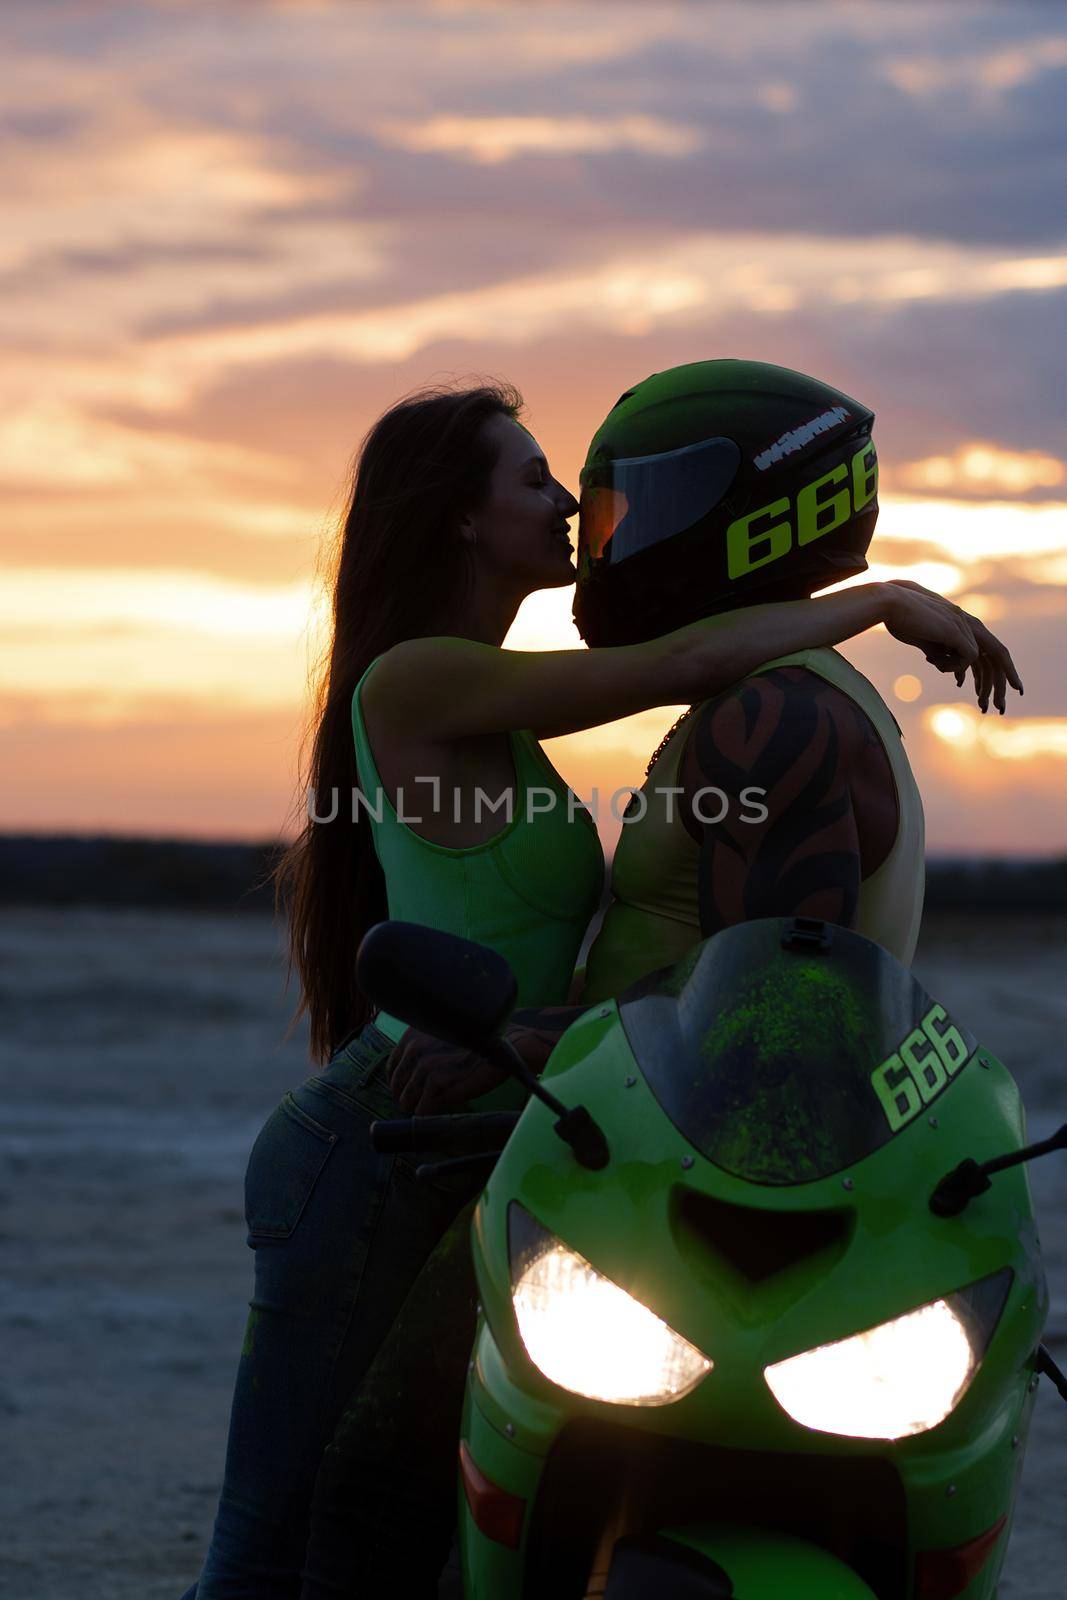 Couple embracing near motorbike on beach at sunset by 3KStudio